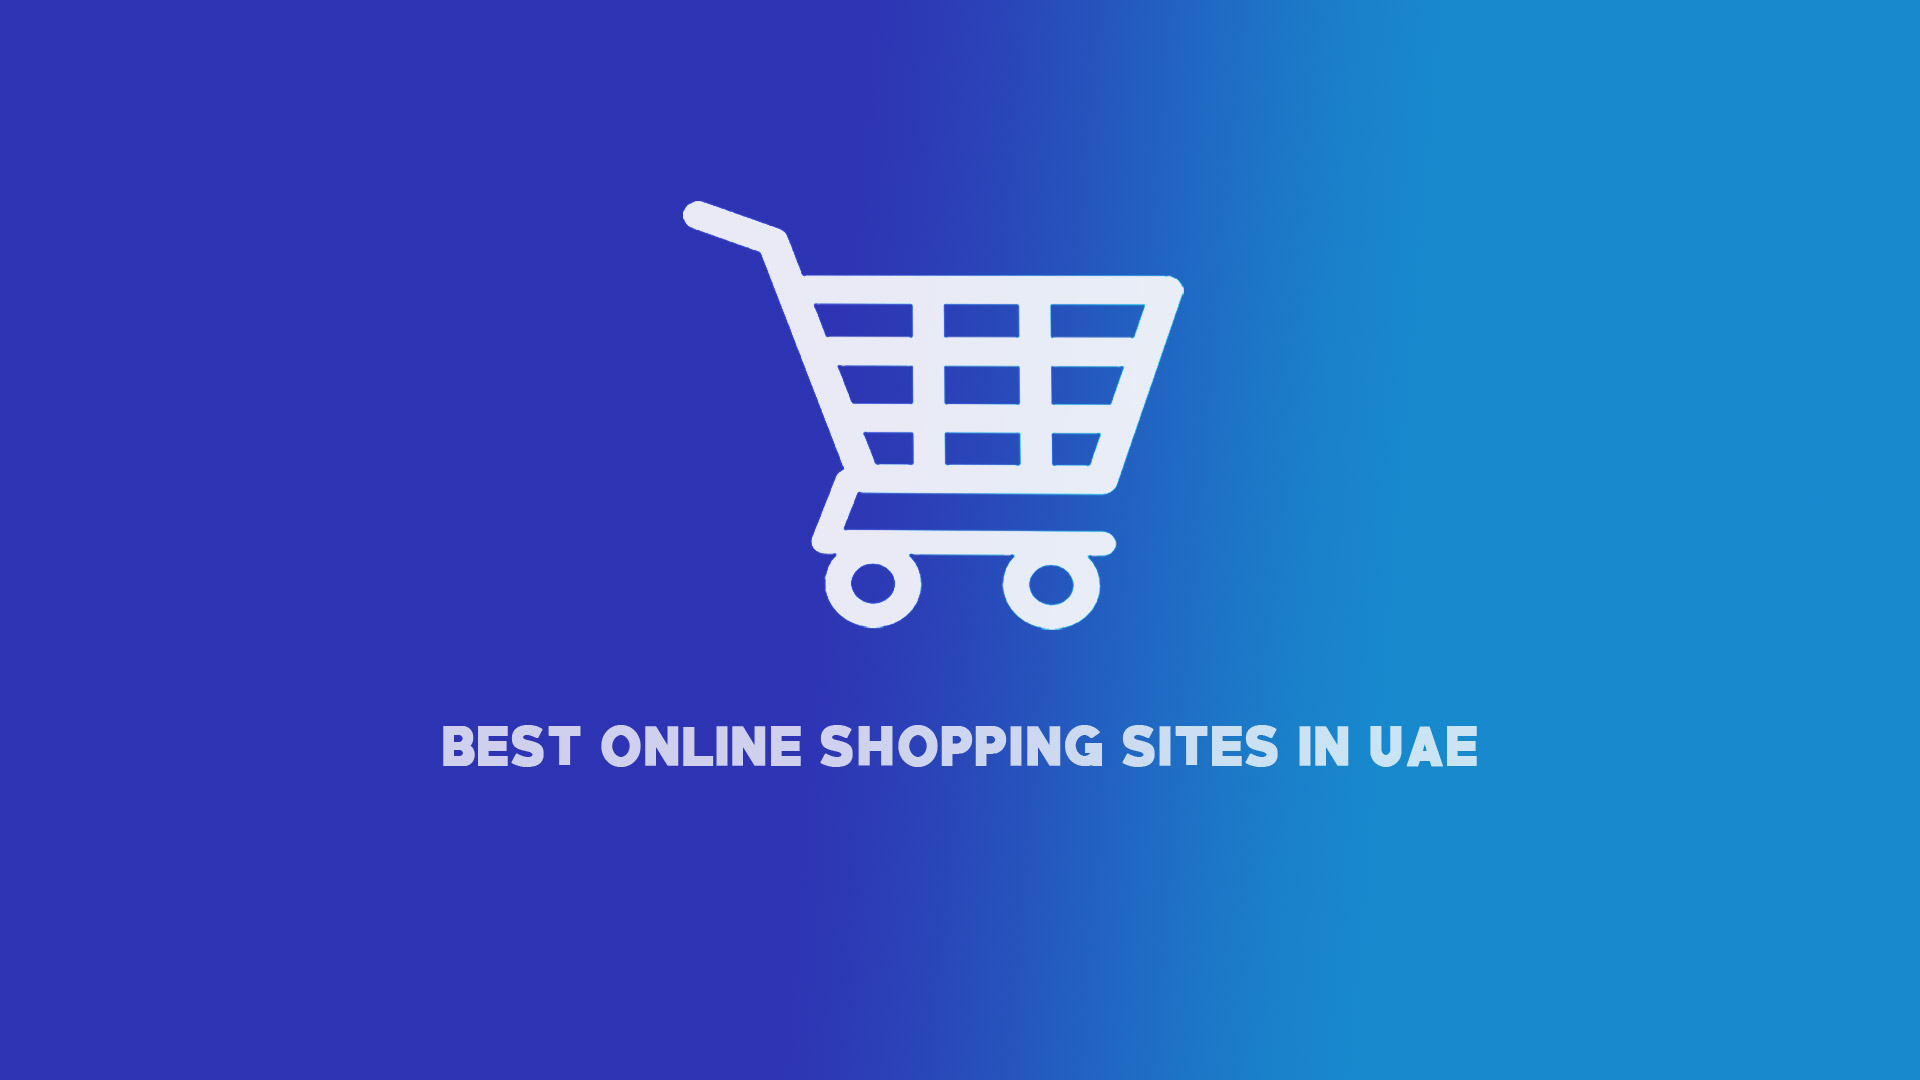 Best Online Shopping Sites in UAE